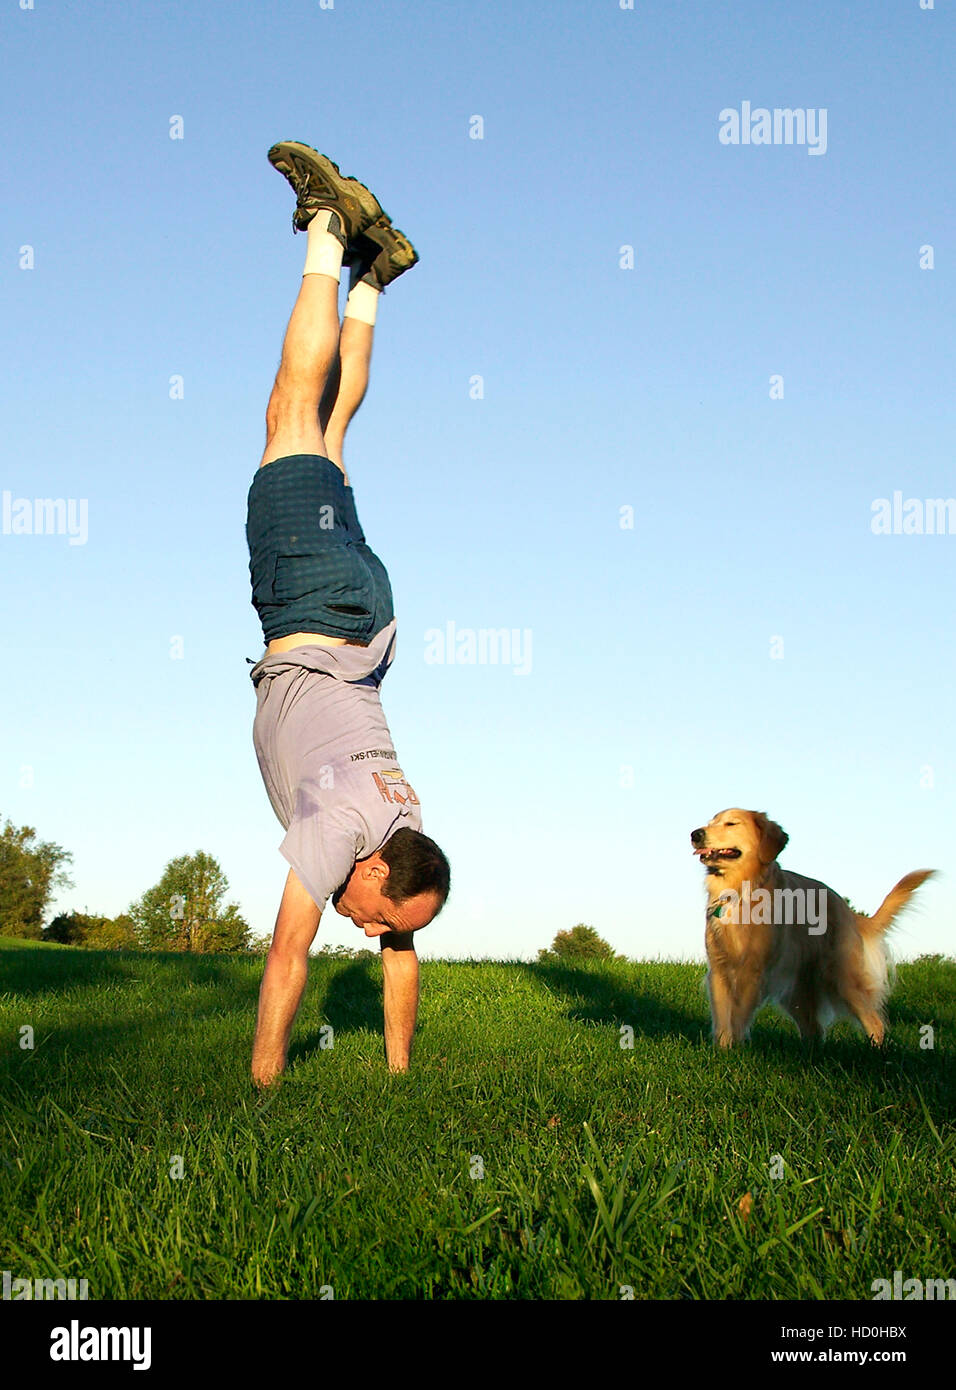 Photographer H. Mark Weidman doing a handstand in a green field with a Golden Retriever looking on. Stock Photo